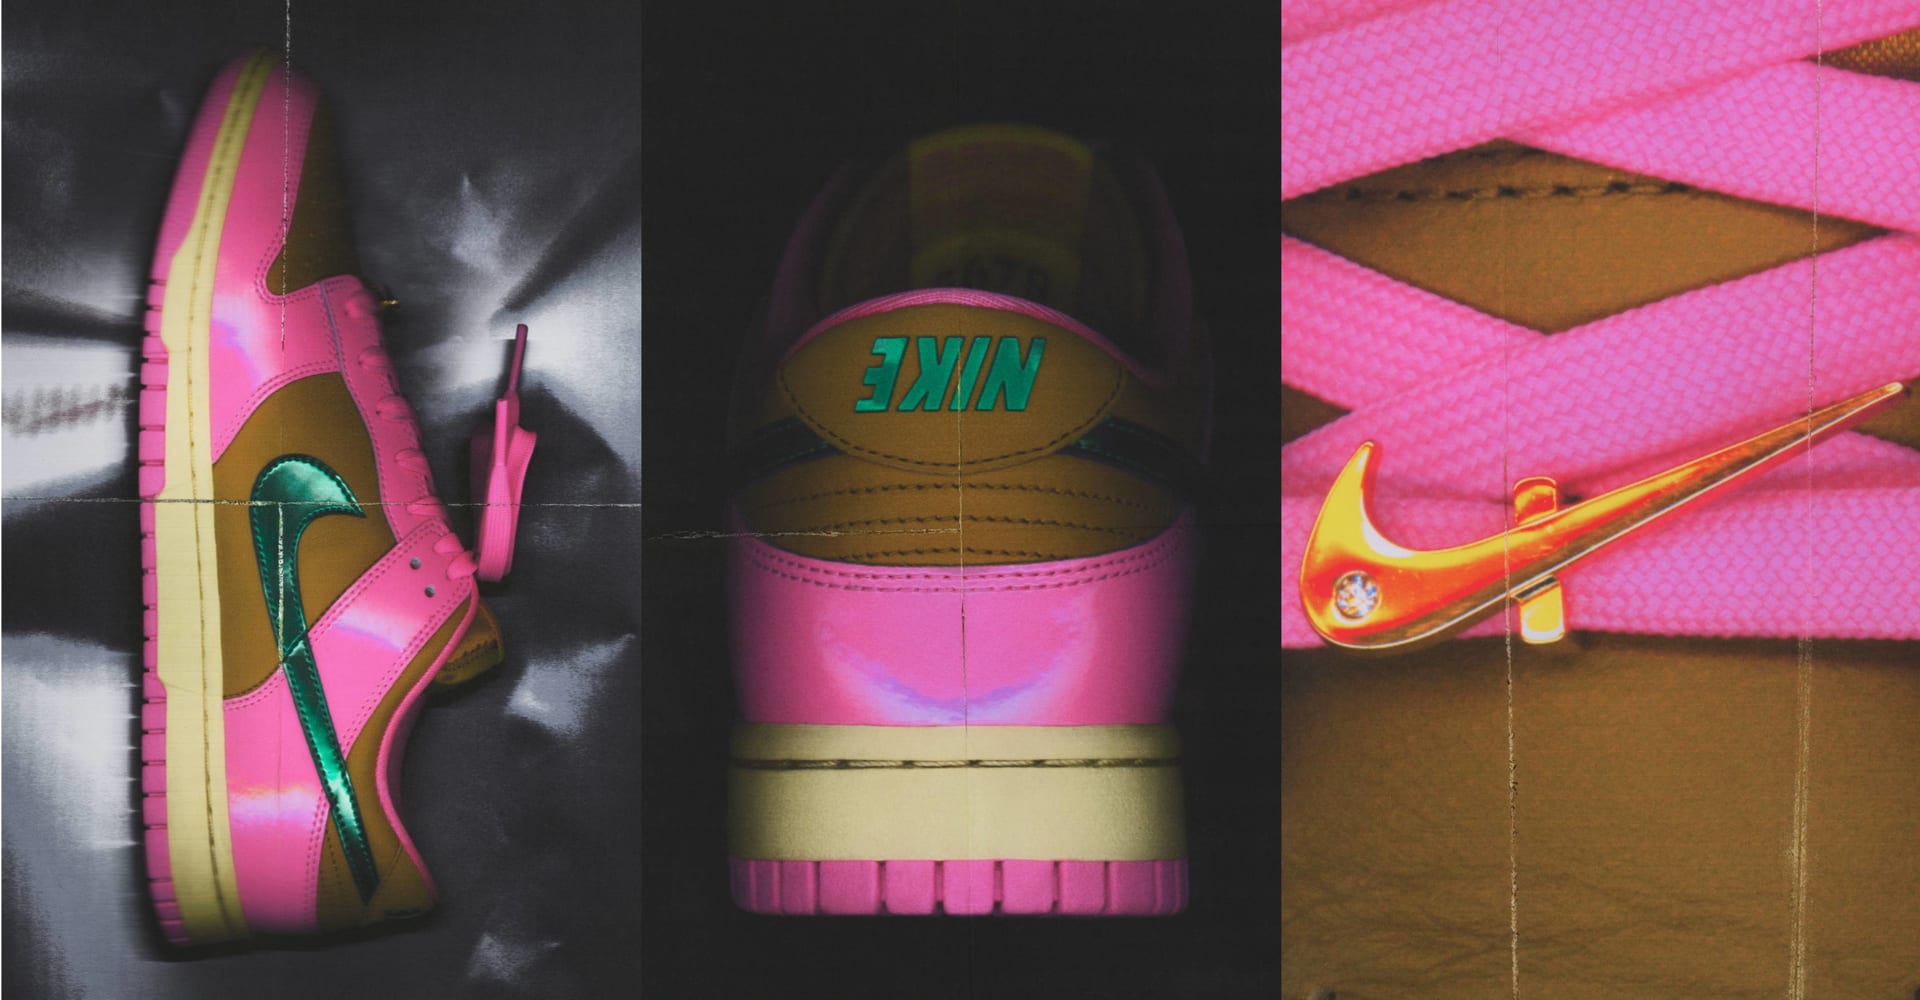 Chaussure Nike Dunk Low x Parris Goebel pour femme